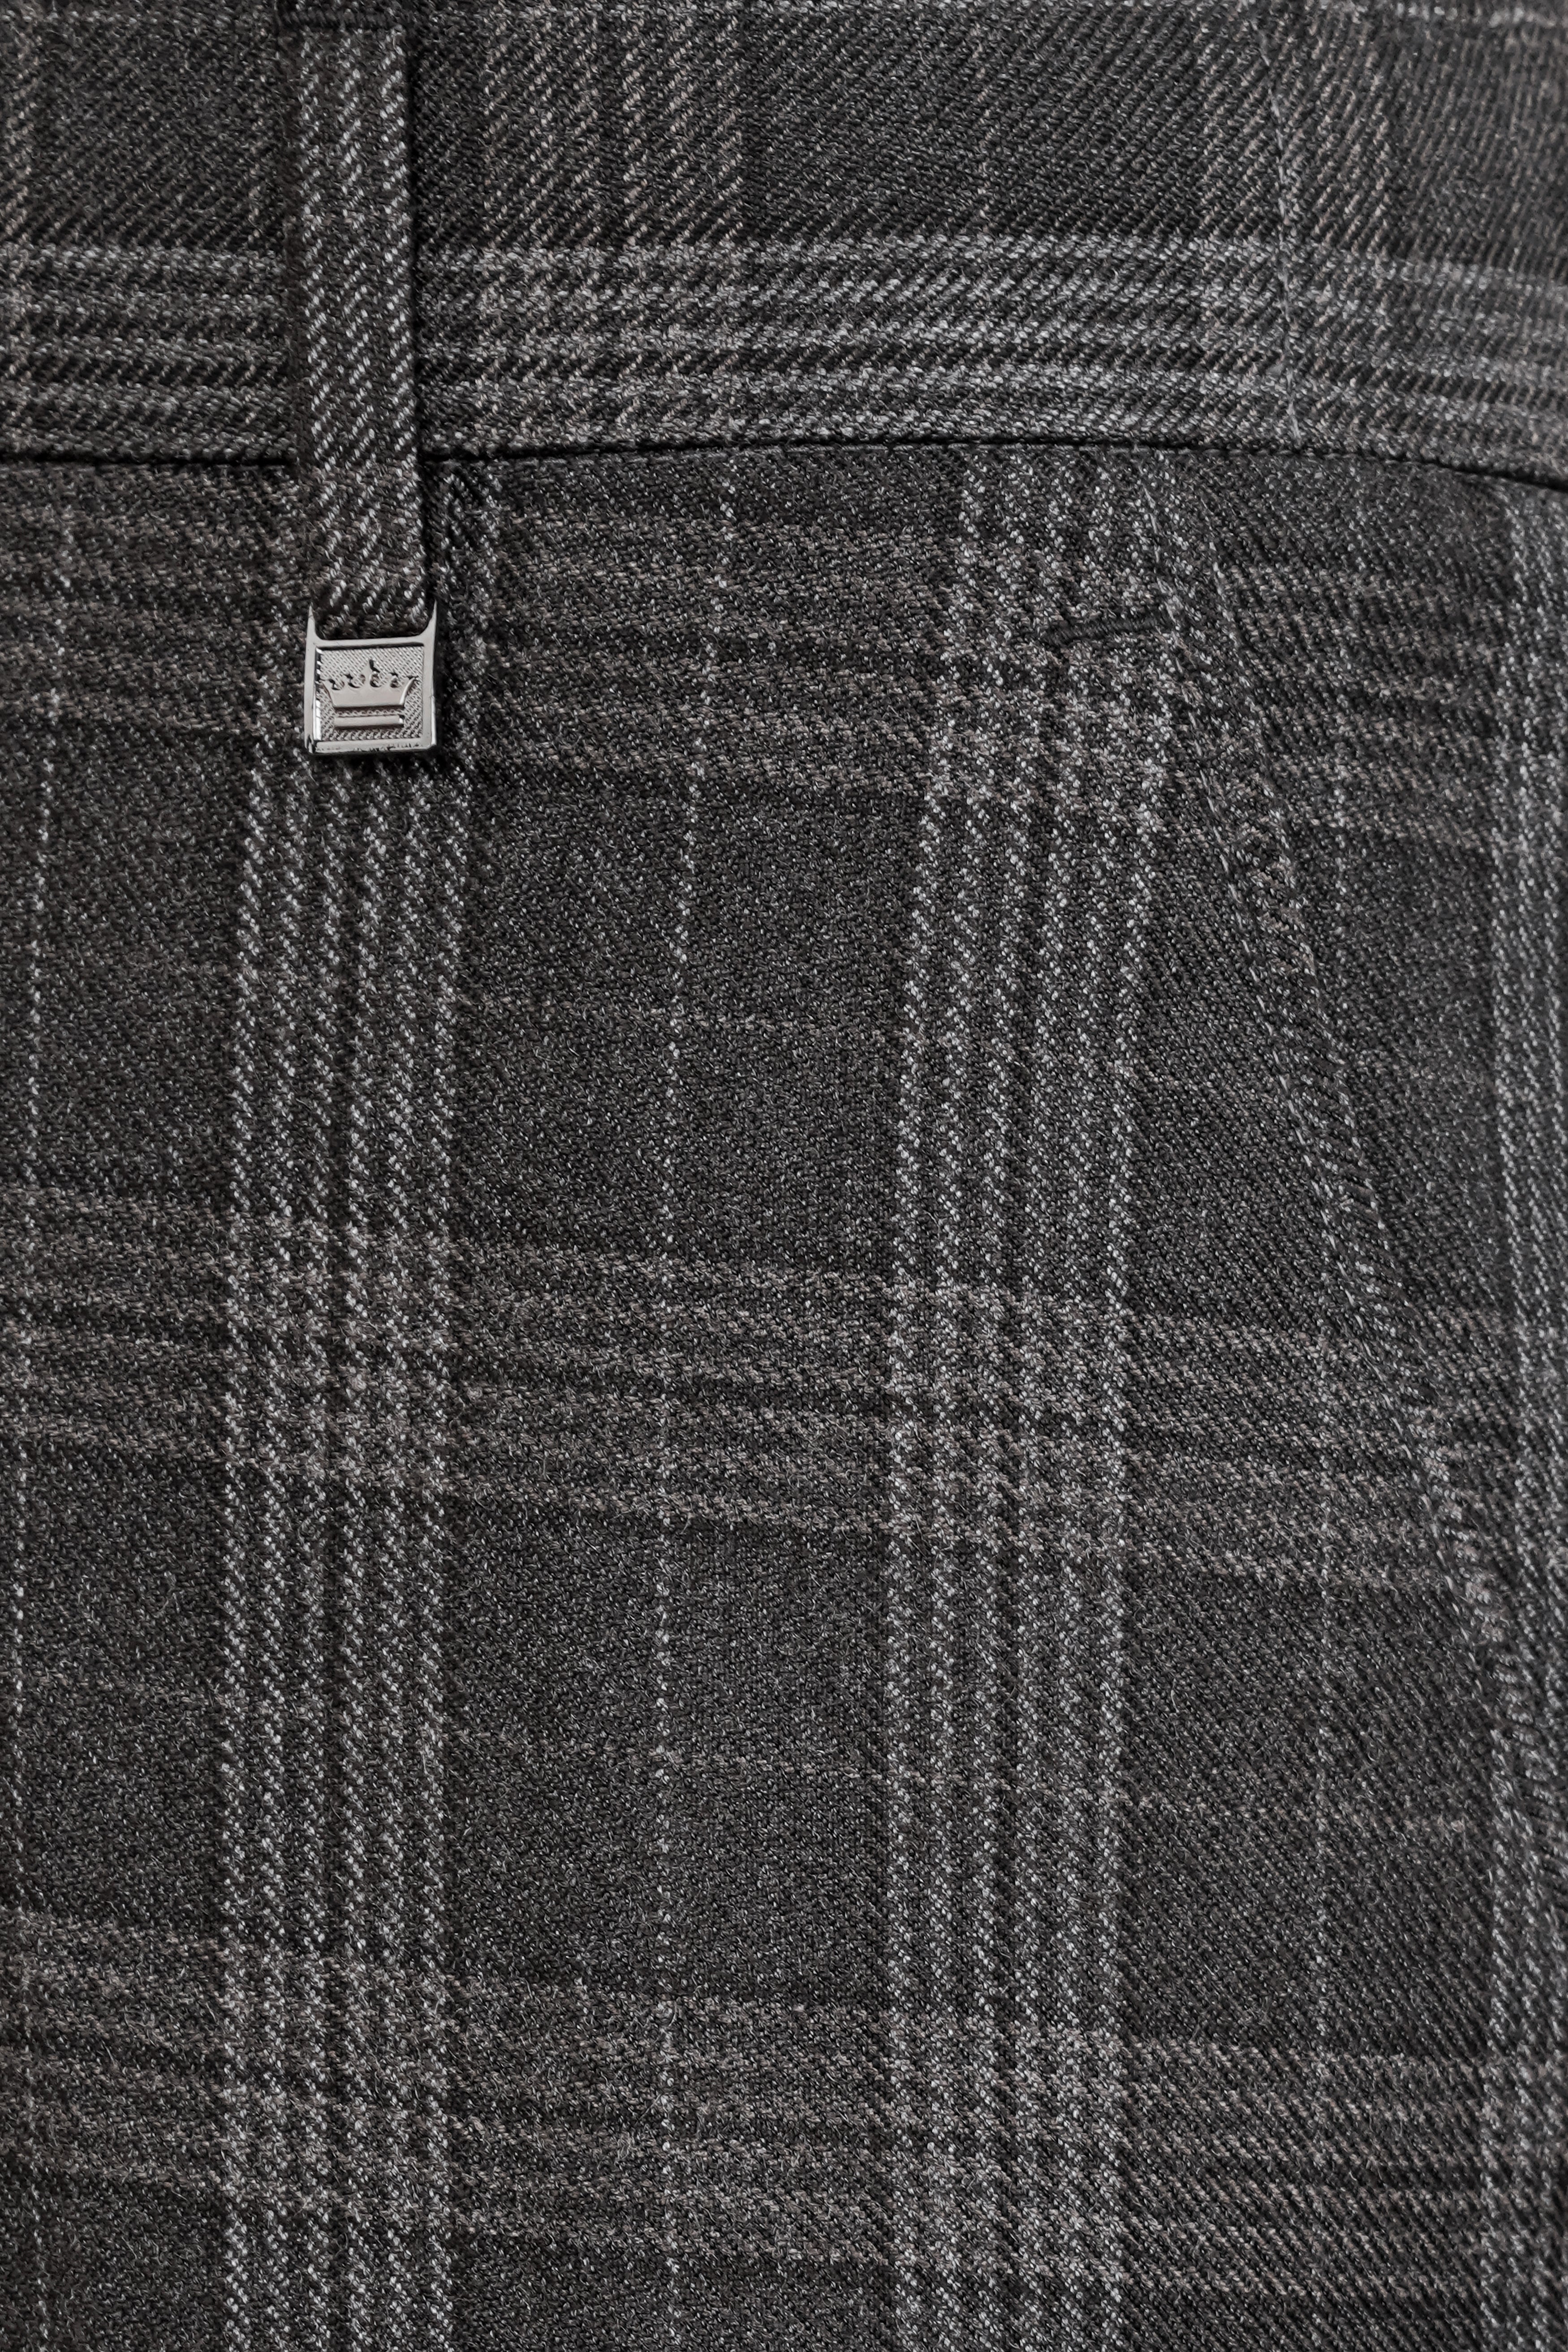 Iridium Gray Plaid Tweed Stretchable Waistband Pant